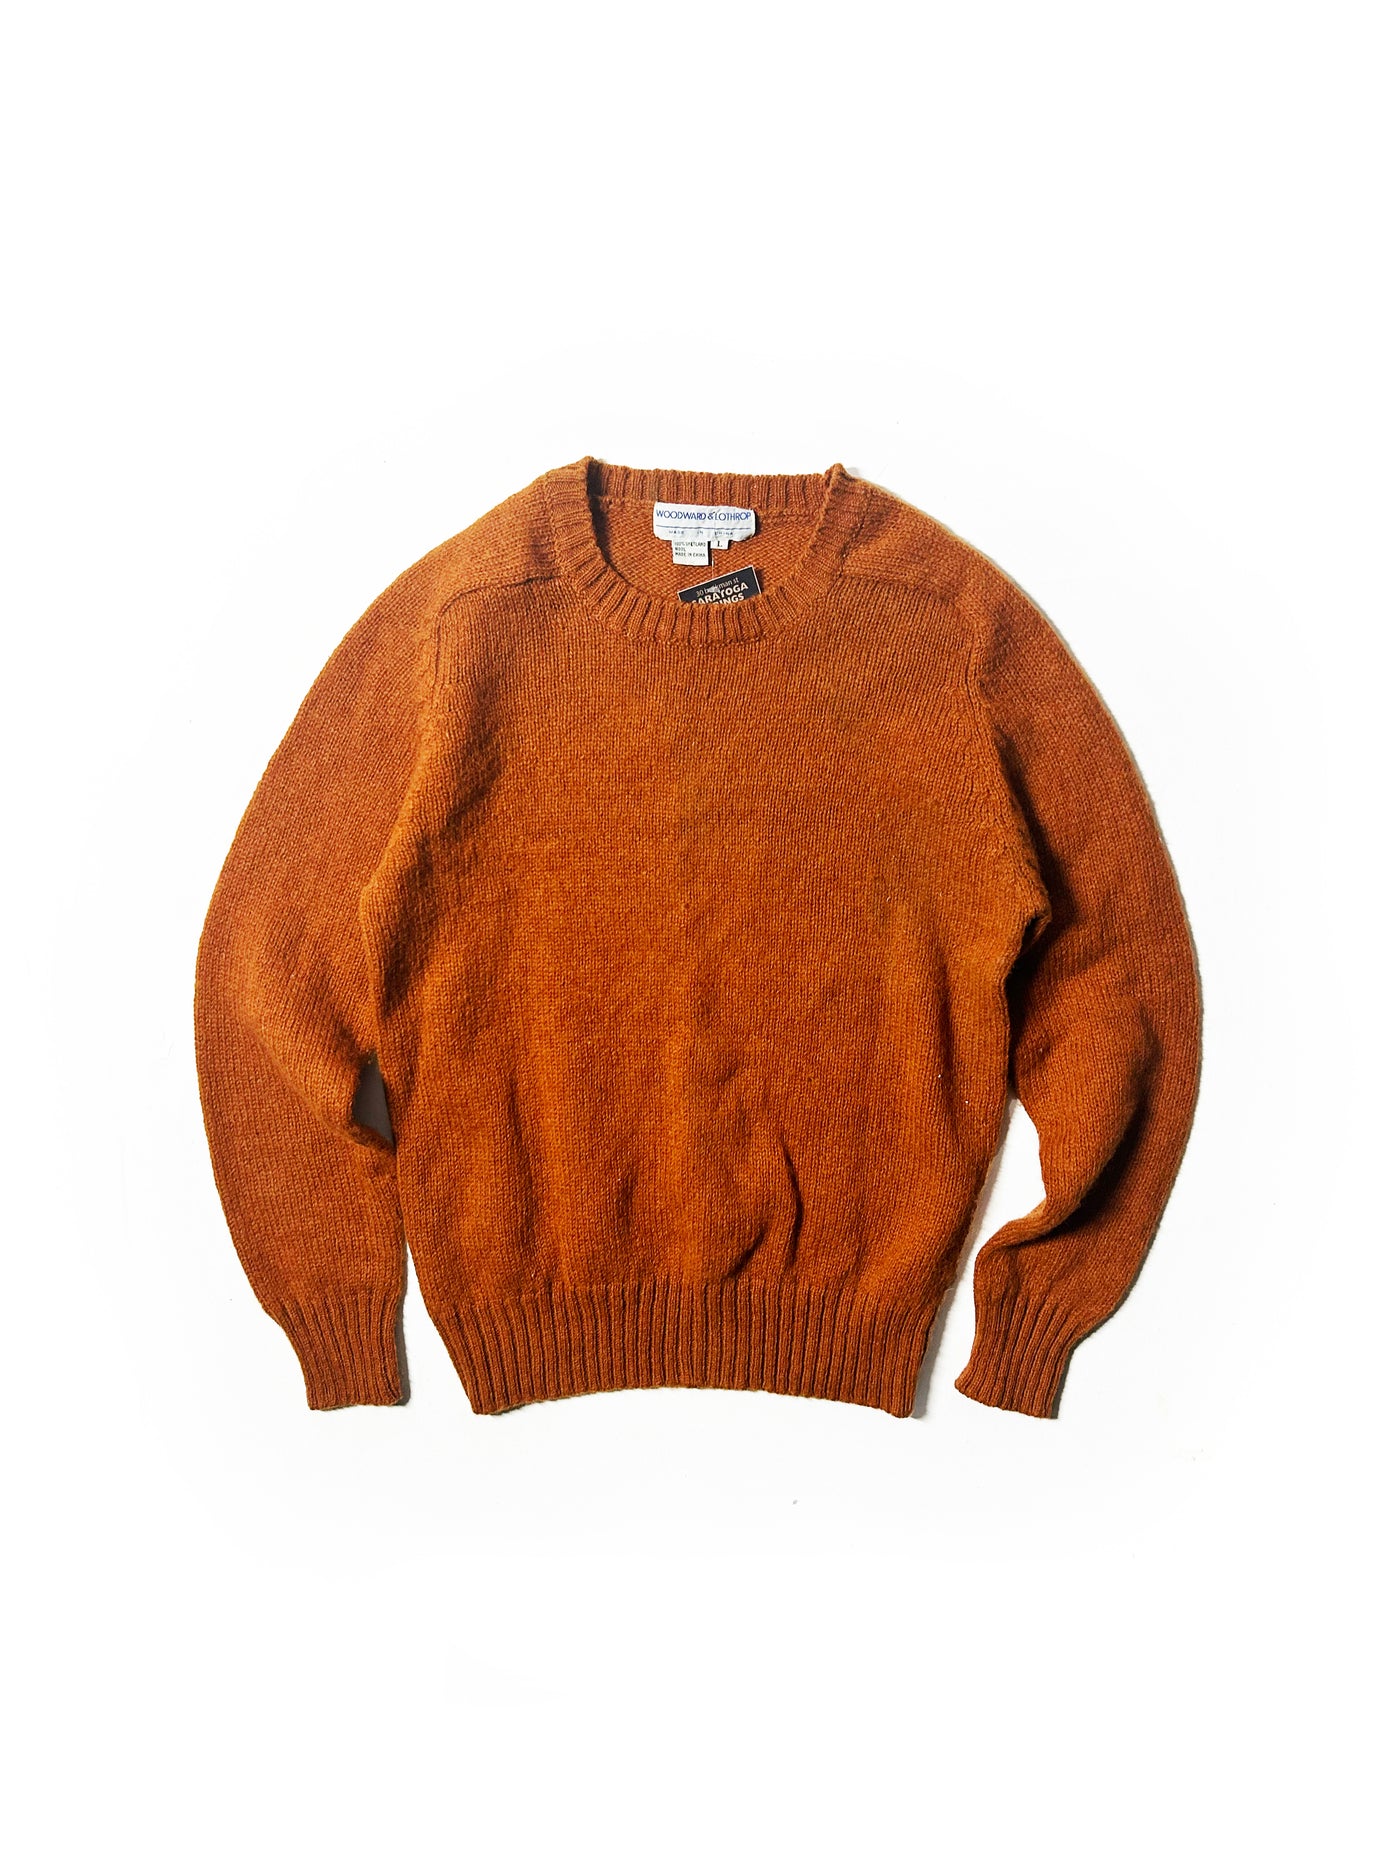 Vintage 80s 100% Shetland Sweater